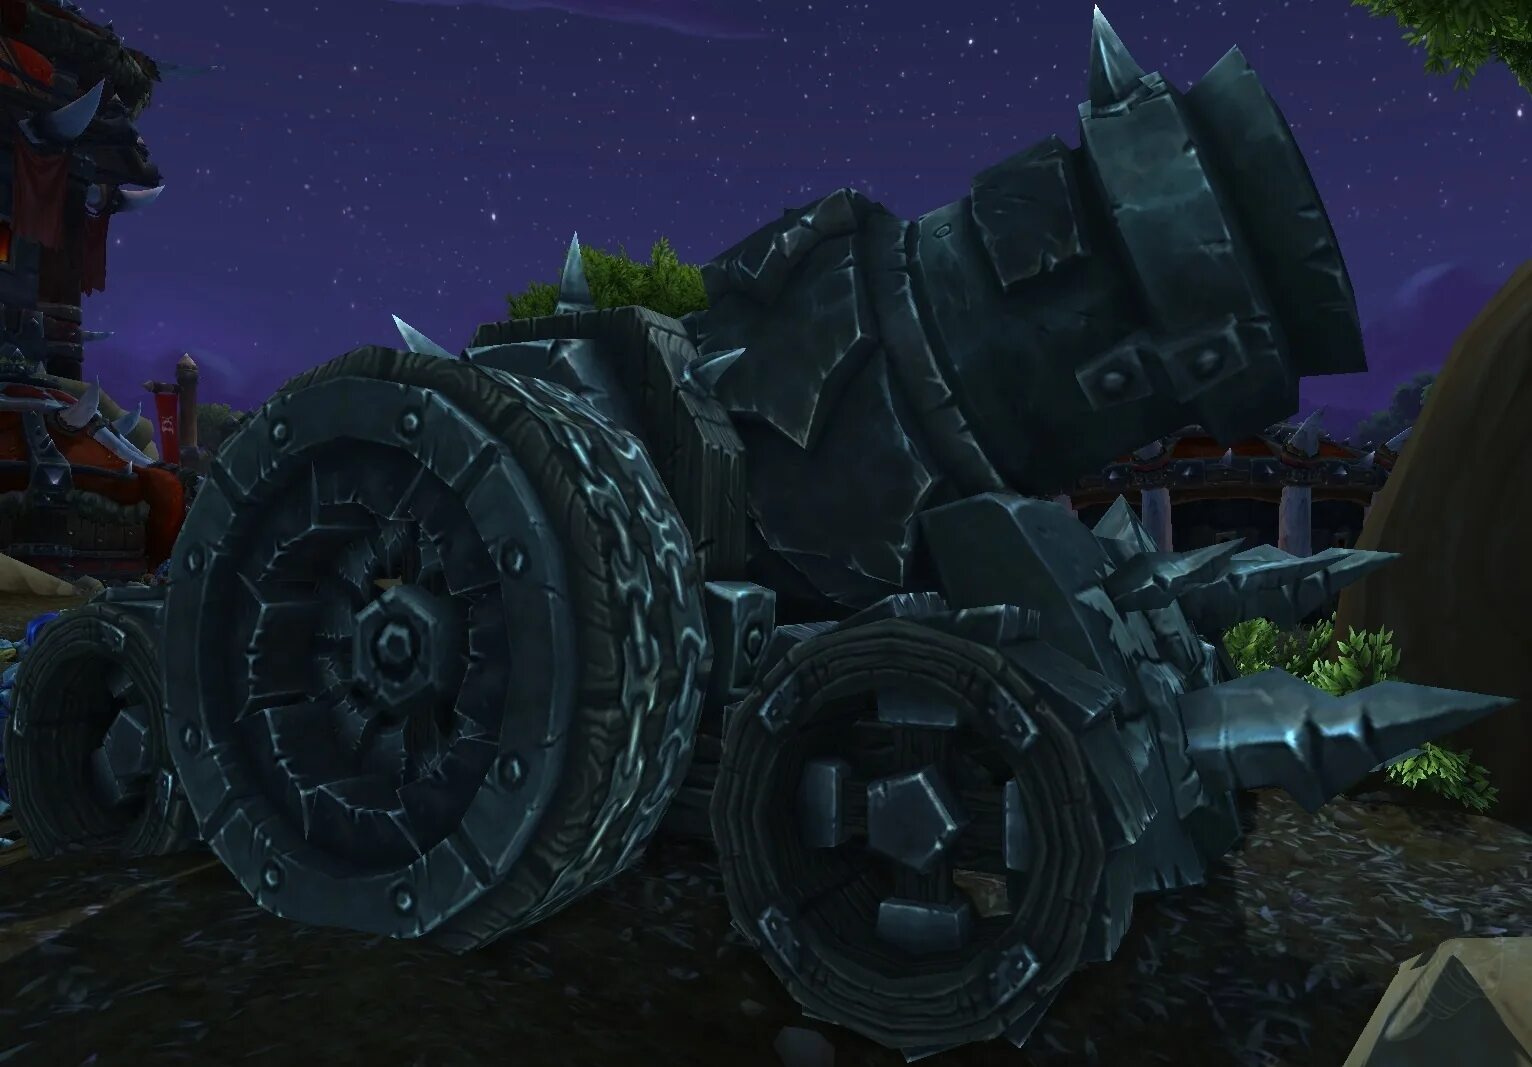 10.2 7 вов. World of Warcraft дирижабль орды. Warcraft железная Орда. Wow танк железной орды. Катапульта орды варкрафт 3.